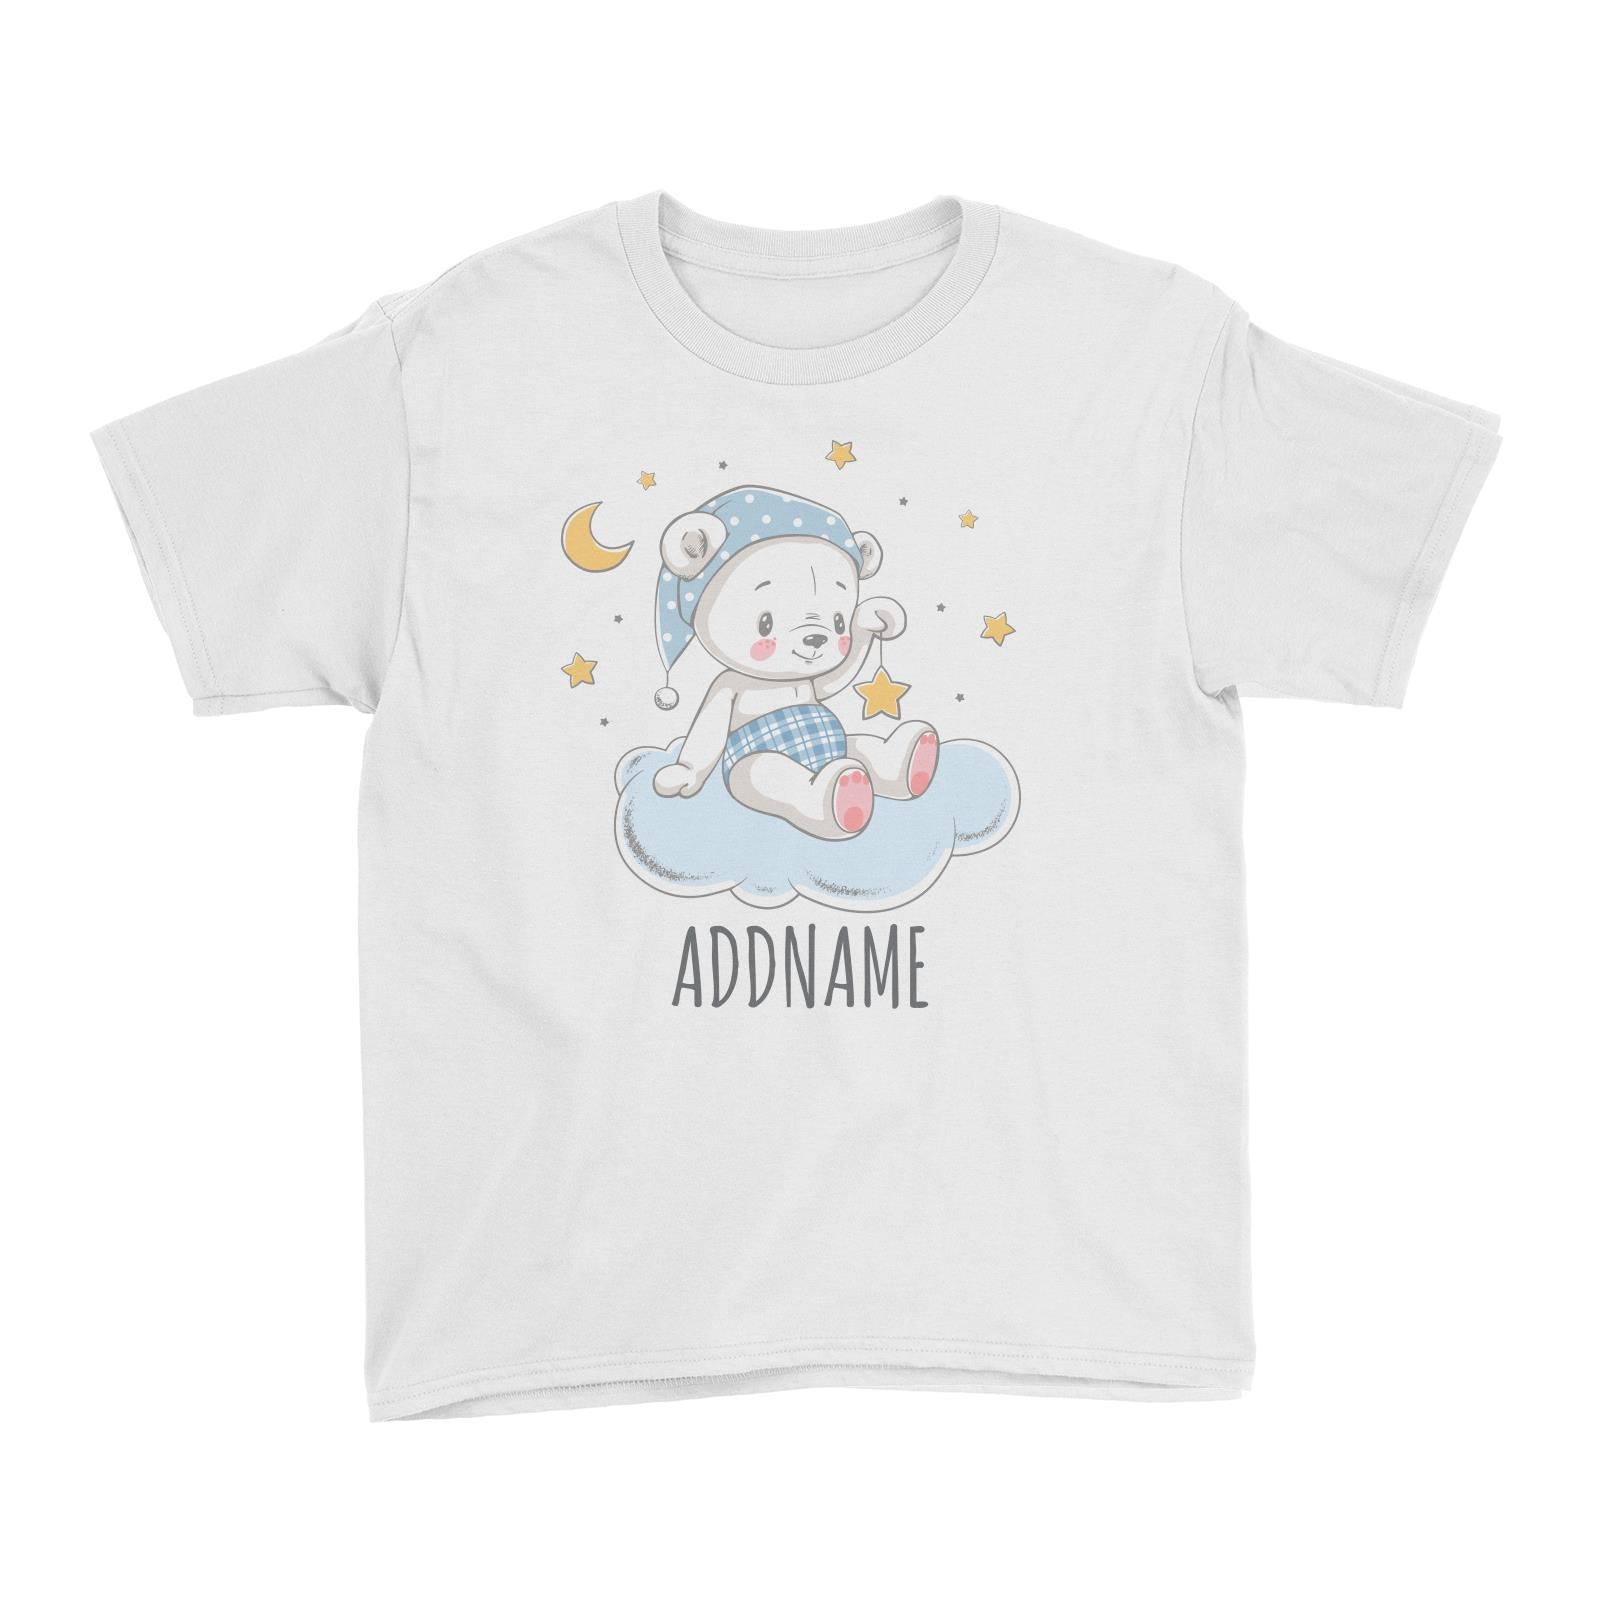 Night Boy Bear Sitting on Cloud White Kid's T-Shirt Personalizable Designs Cute Sweet Animal For Boys Newborn HG